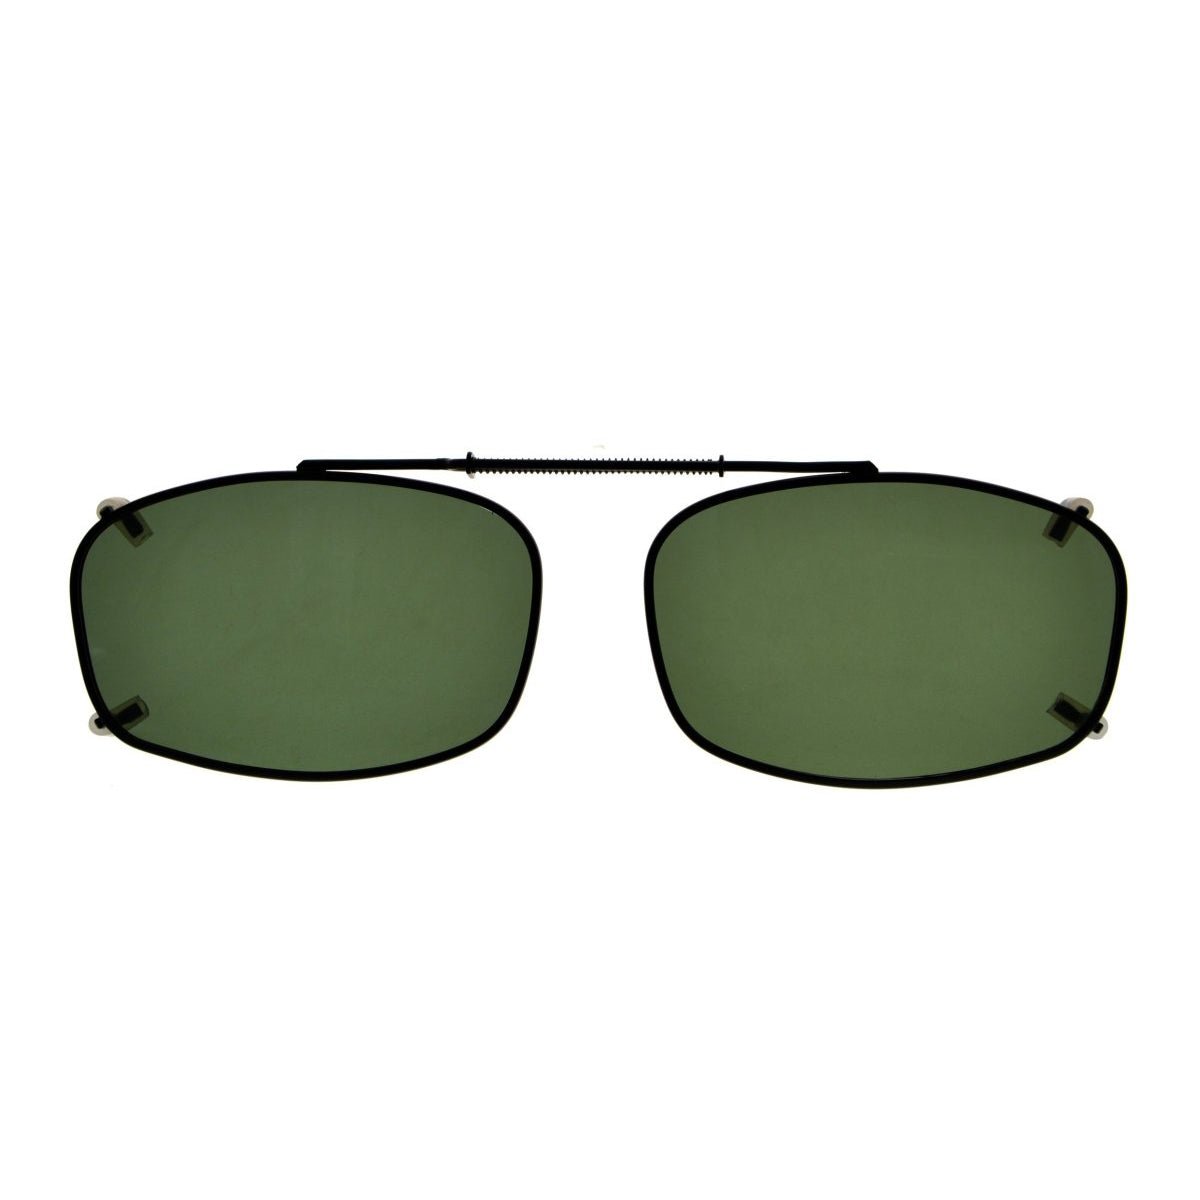 Metal Frame Polarized Lens Clip on Sunglasses C65(54MMx34MM)eyekeeper.com